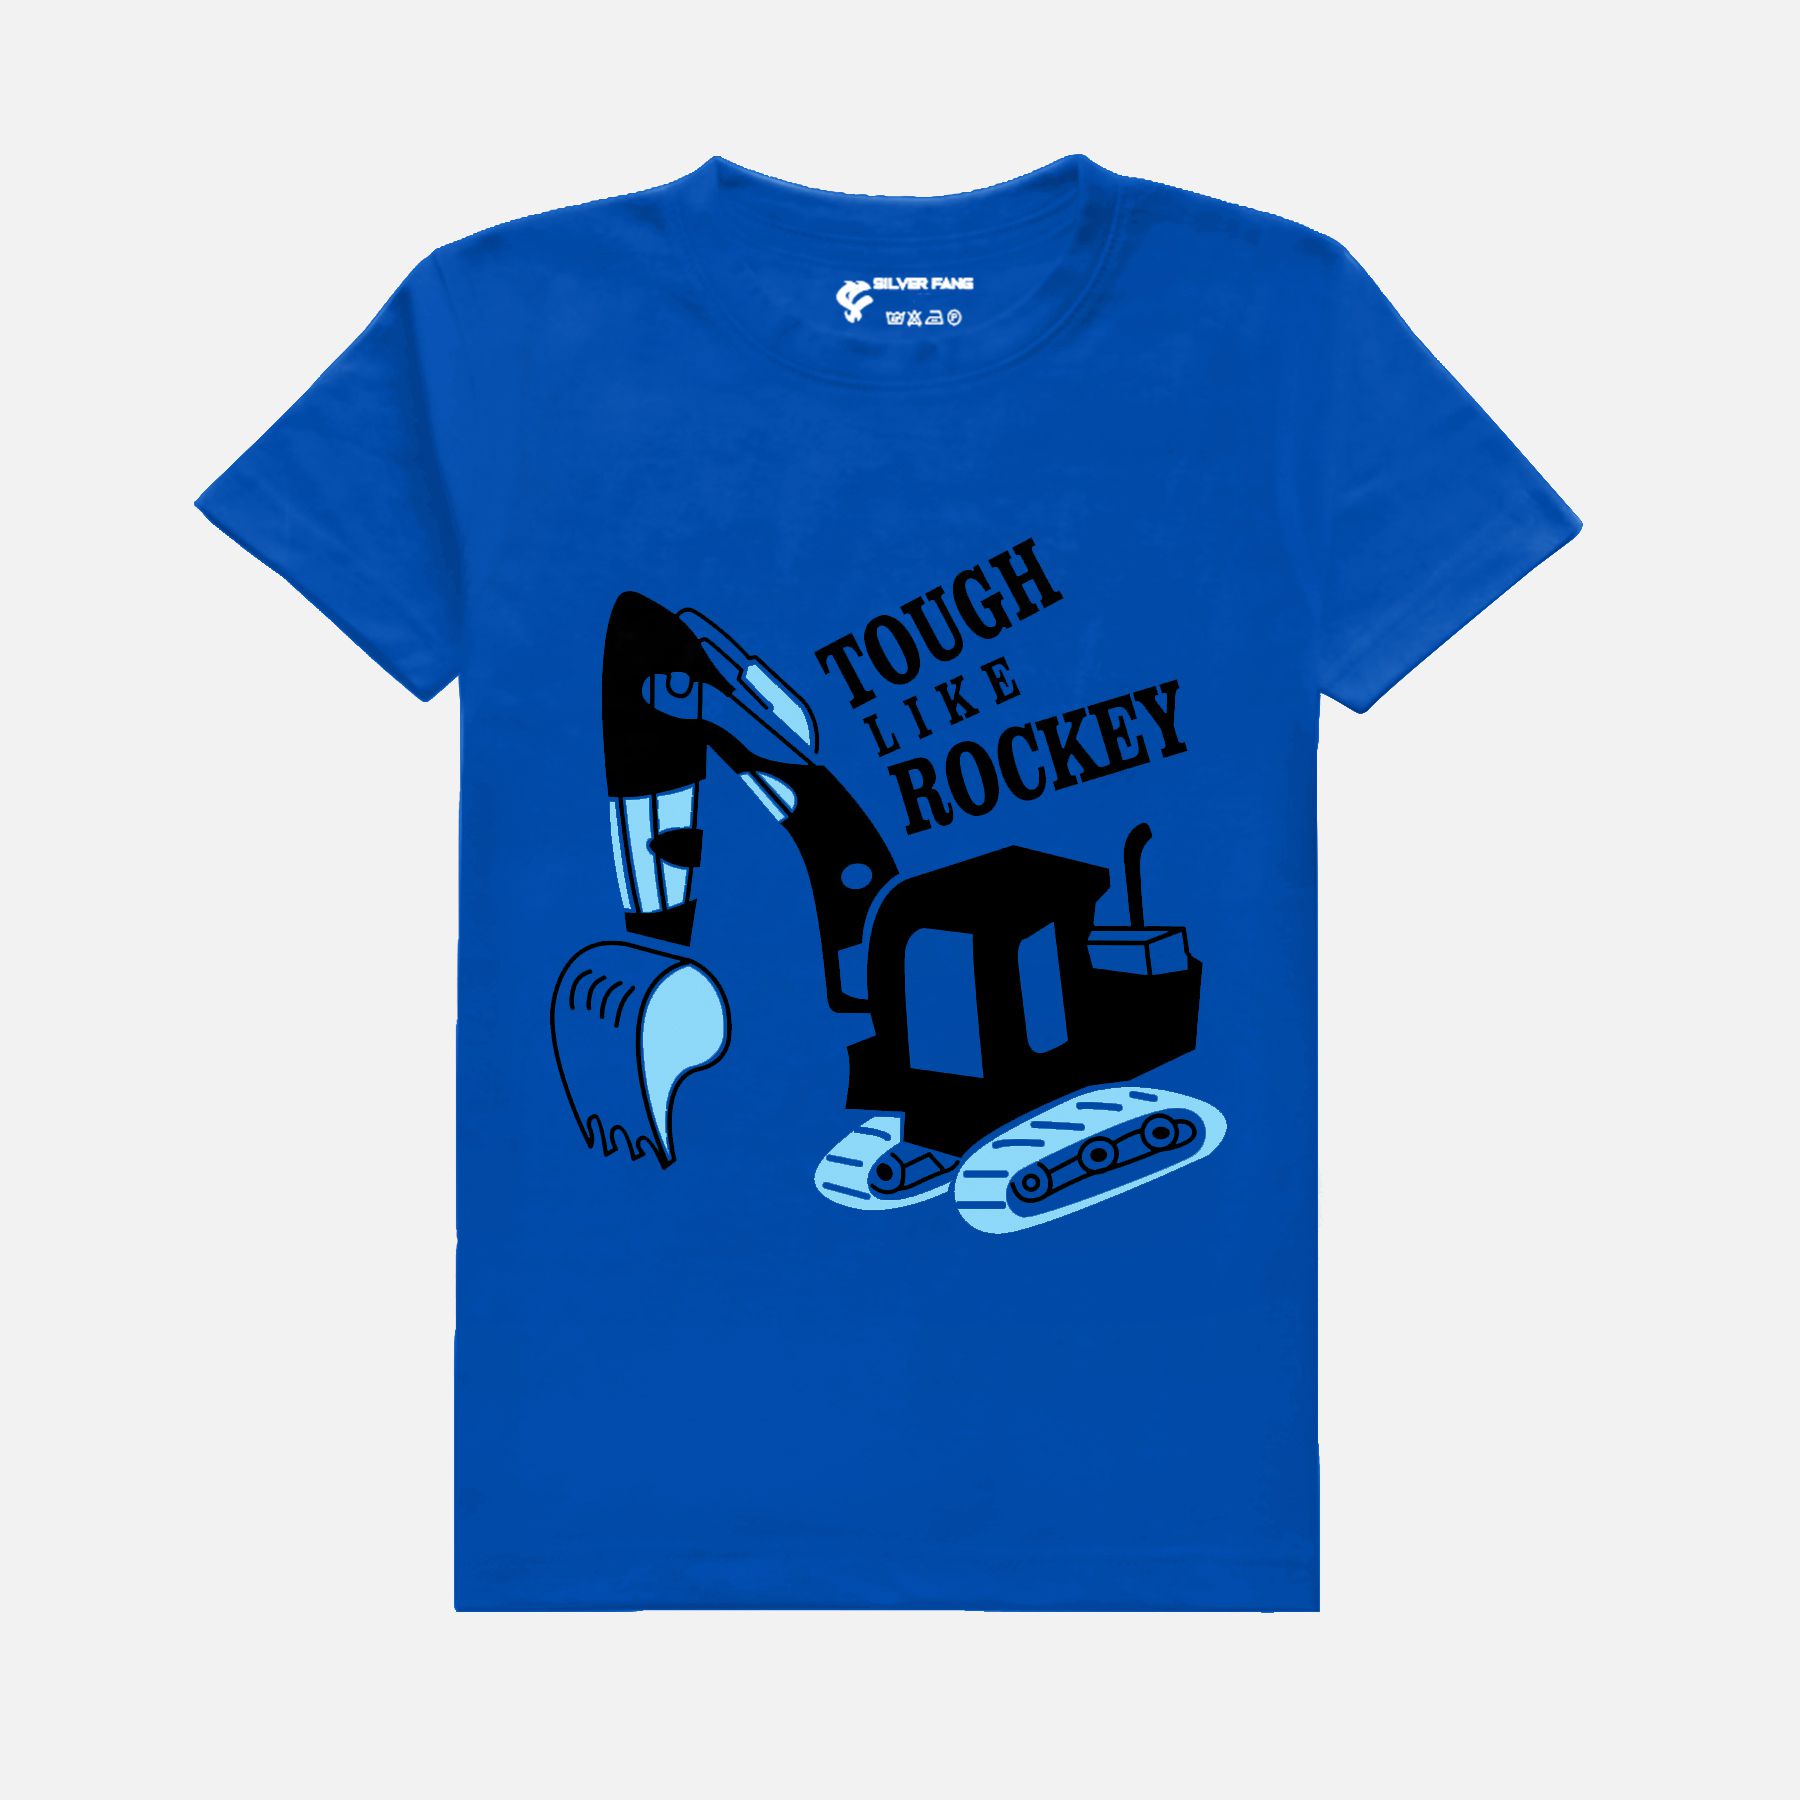     			SILVER FANG Blue Cotton Boy's T-Shirt ( Pack of 1 )